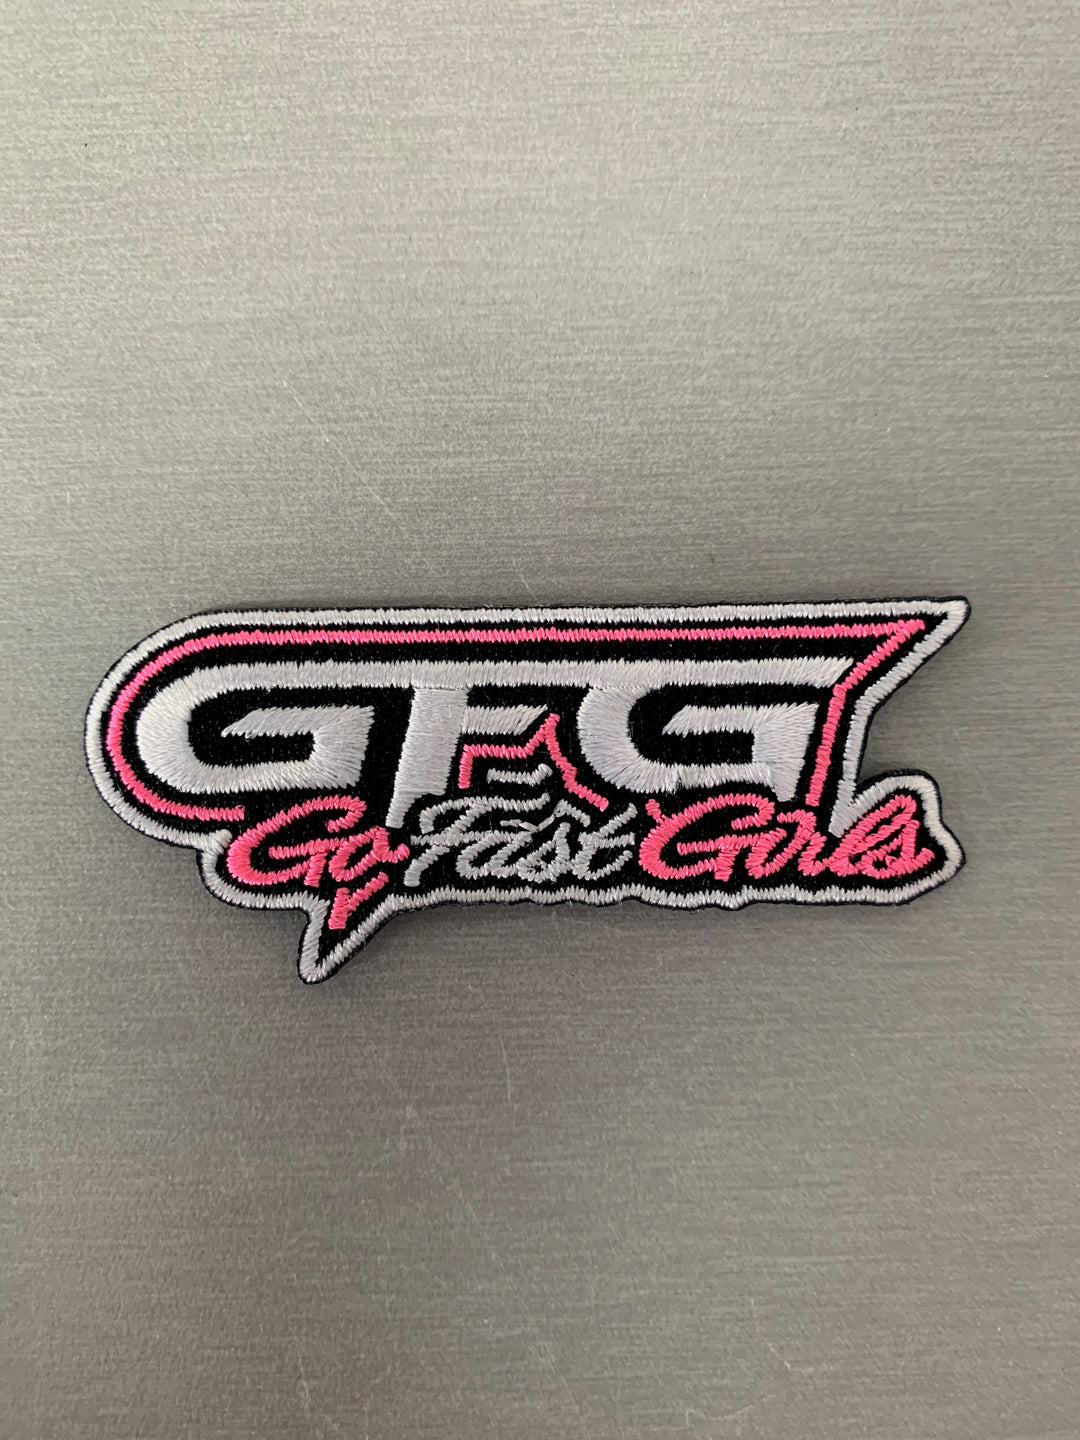 GFG Patches